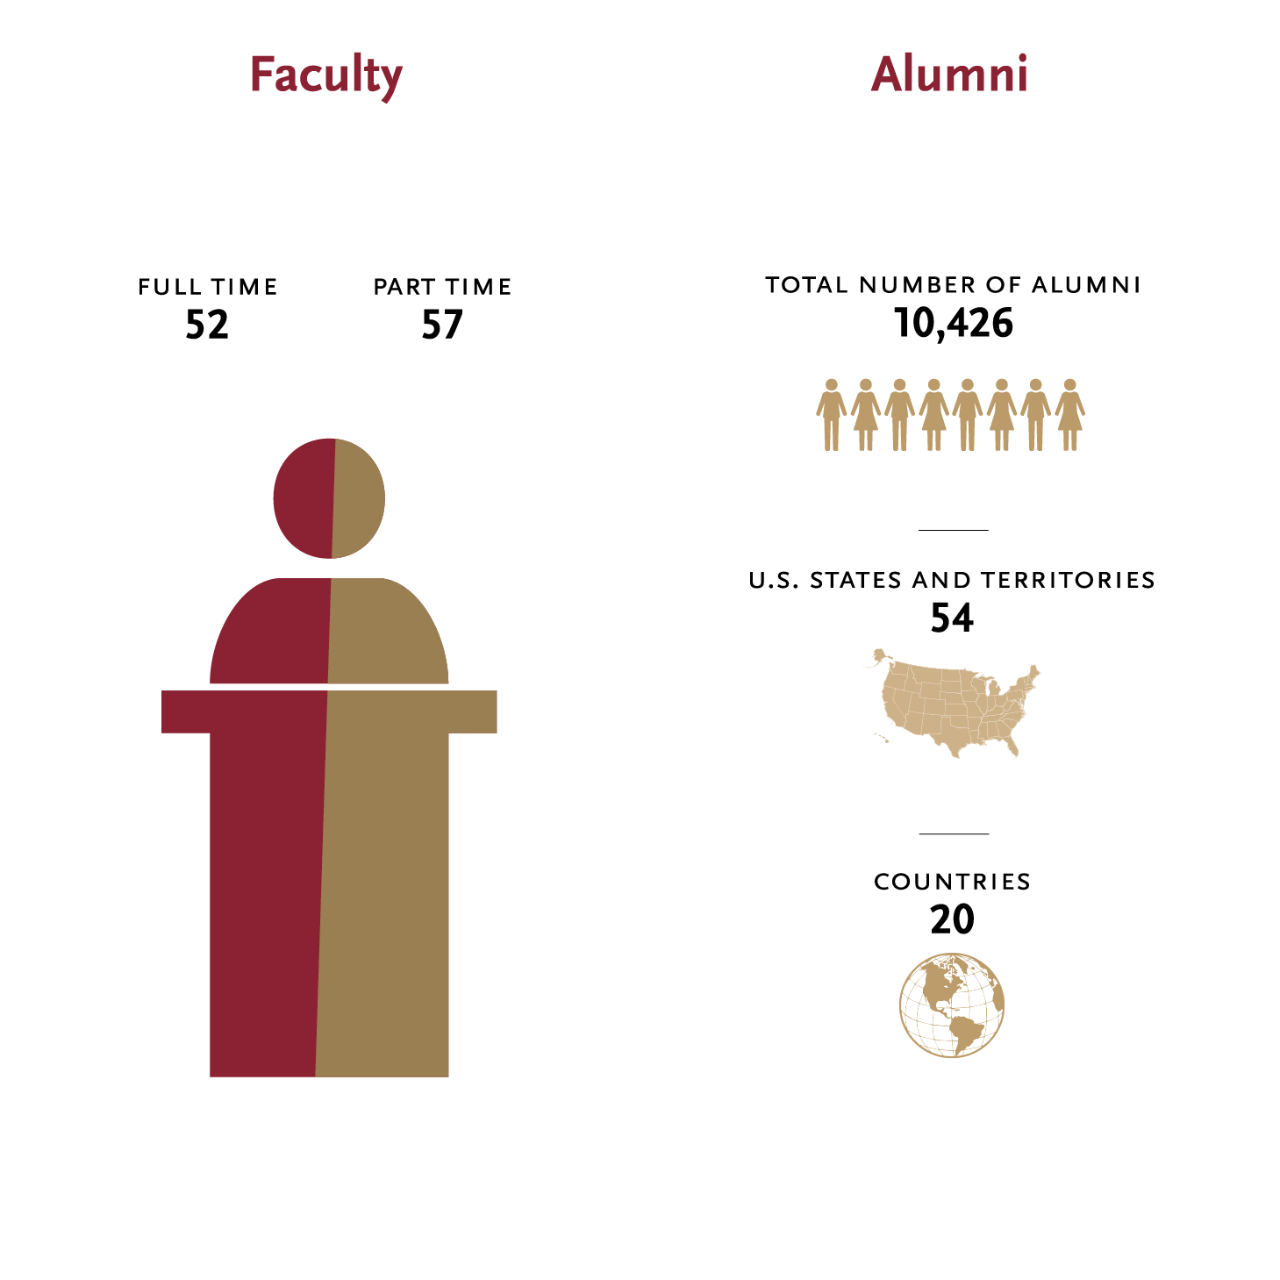 CSON faculty and alumni data